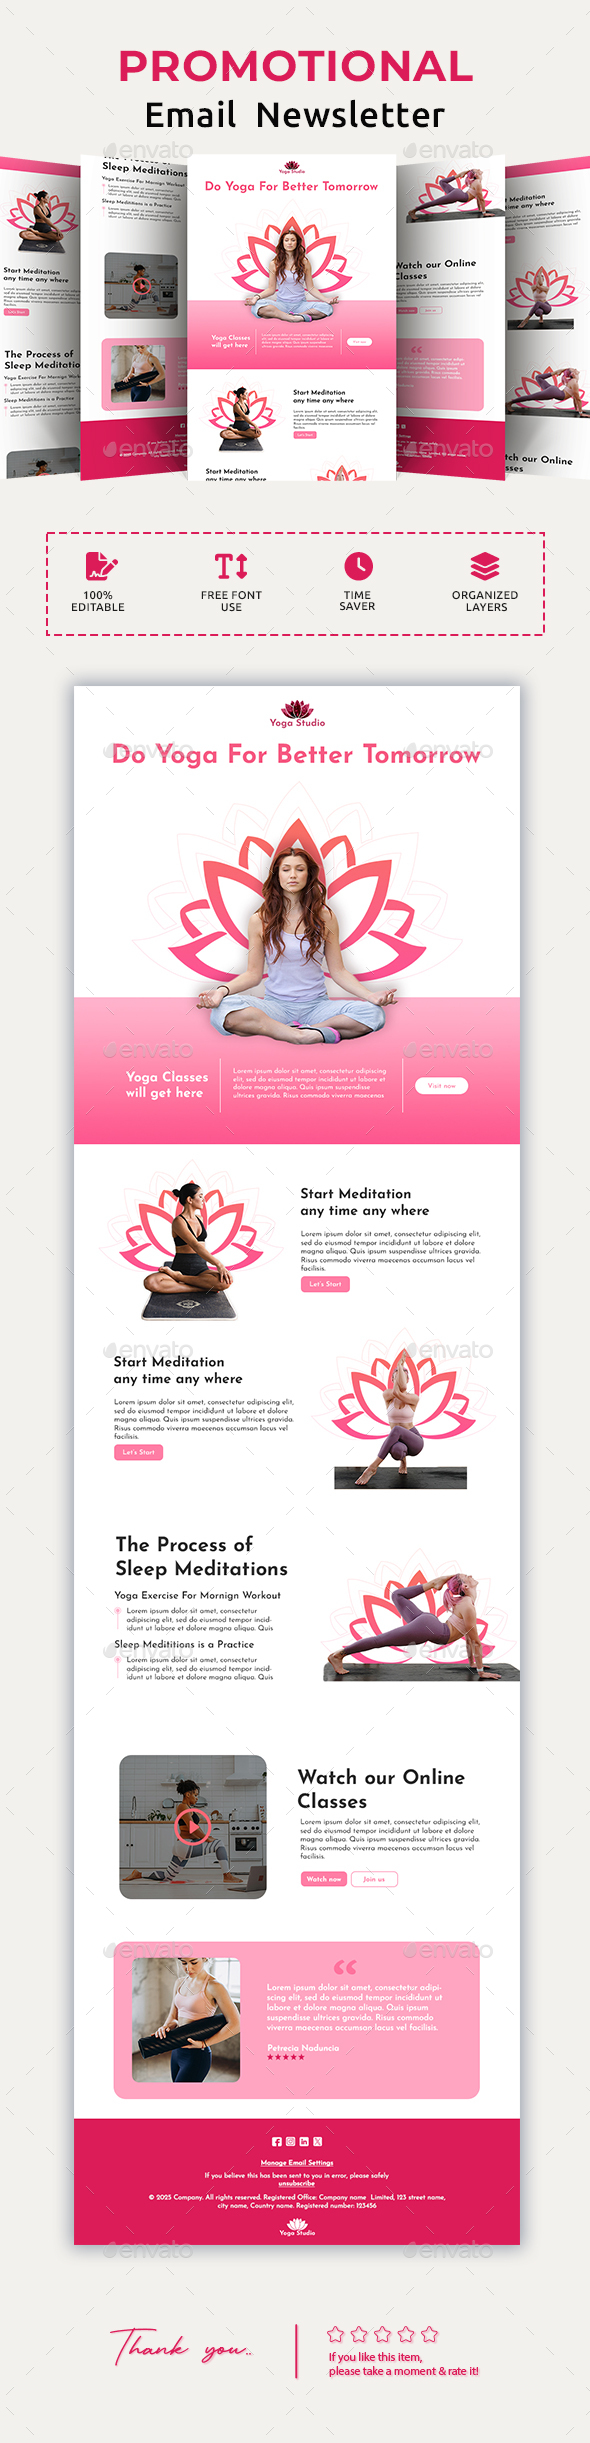 [DOWNLOAD]Yoga Meditation Email Newsletter PSD Template